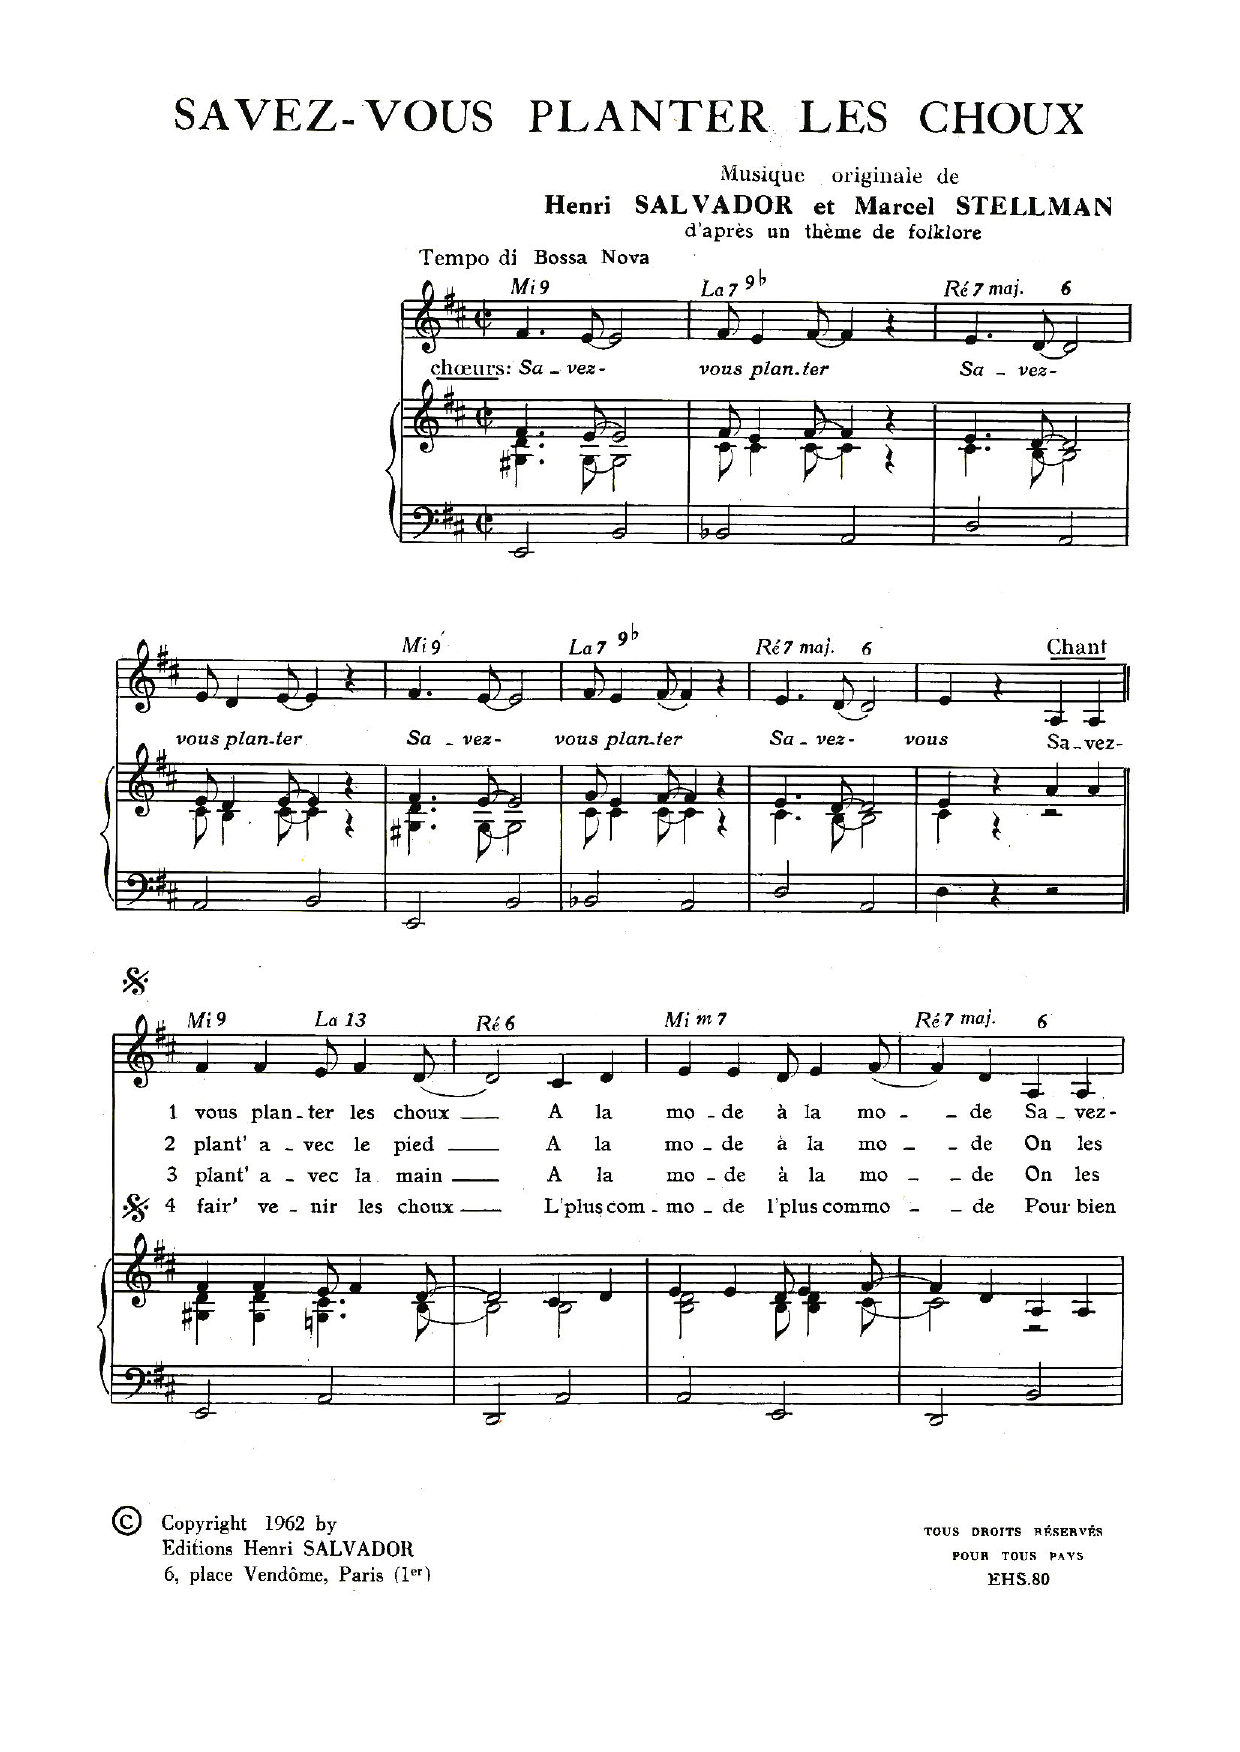 Henri Salvador Savez-Vous Planter Les Choux? Sheet Music Notes & Chords for Piano & Vocal - Download or Print PDF